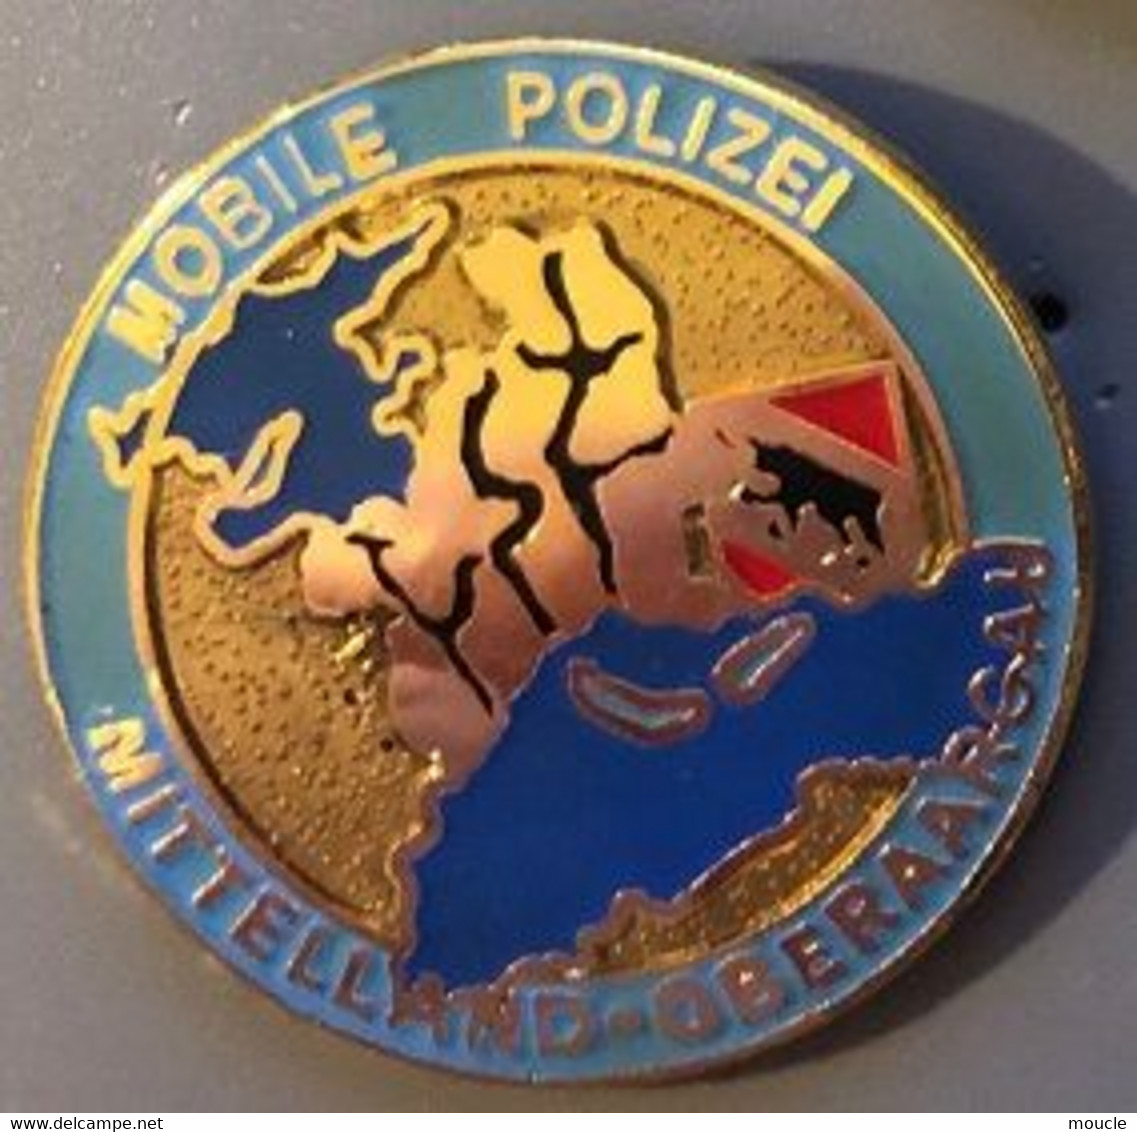 MOBILE POLIZEI - POLICE CANTON DE BERNE - MITTELLAND OBER  AARGAU - SCHWEIZ - POLICA - SVIZZERA - OURS - BÄR -  (29) - Police